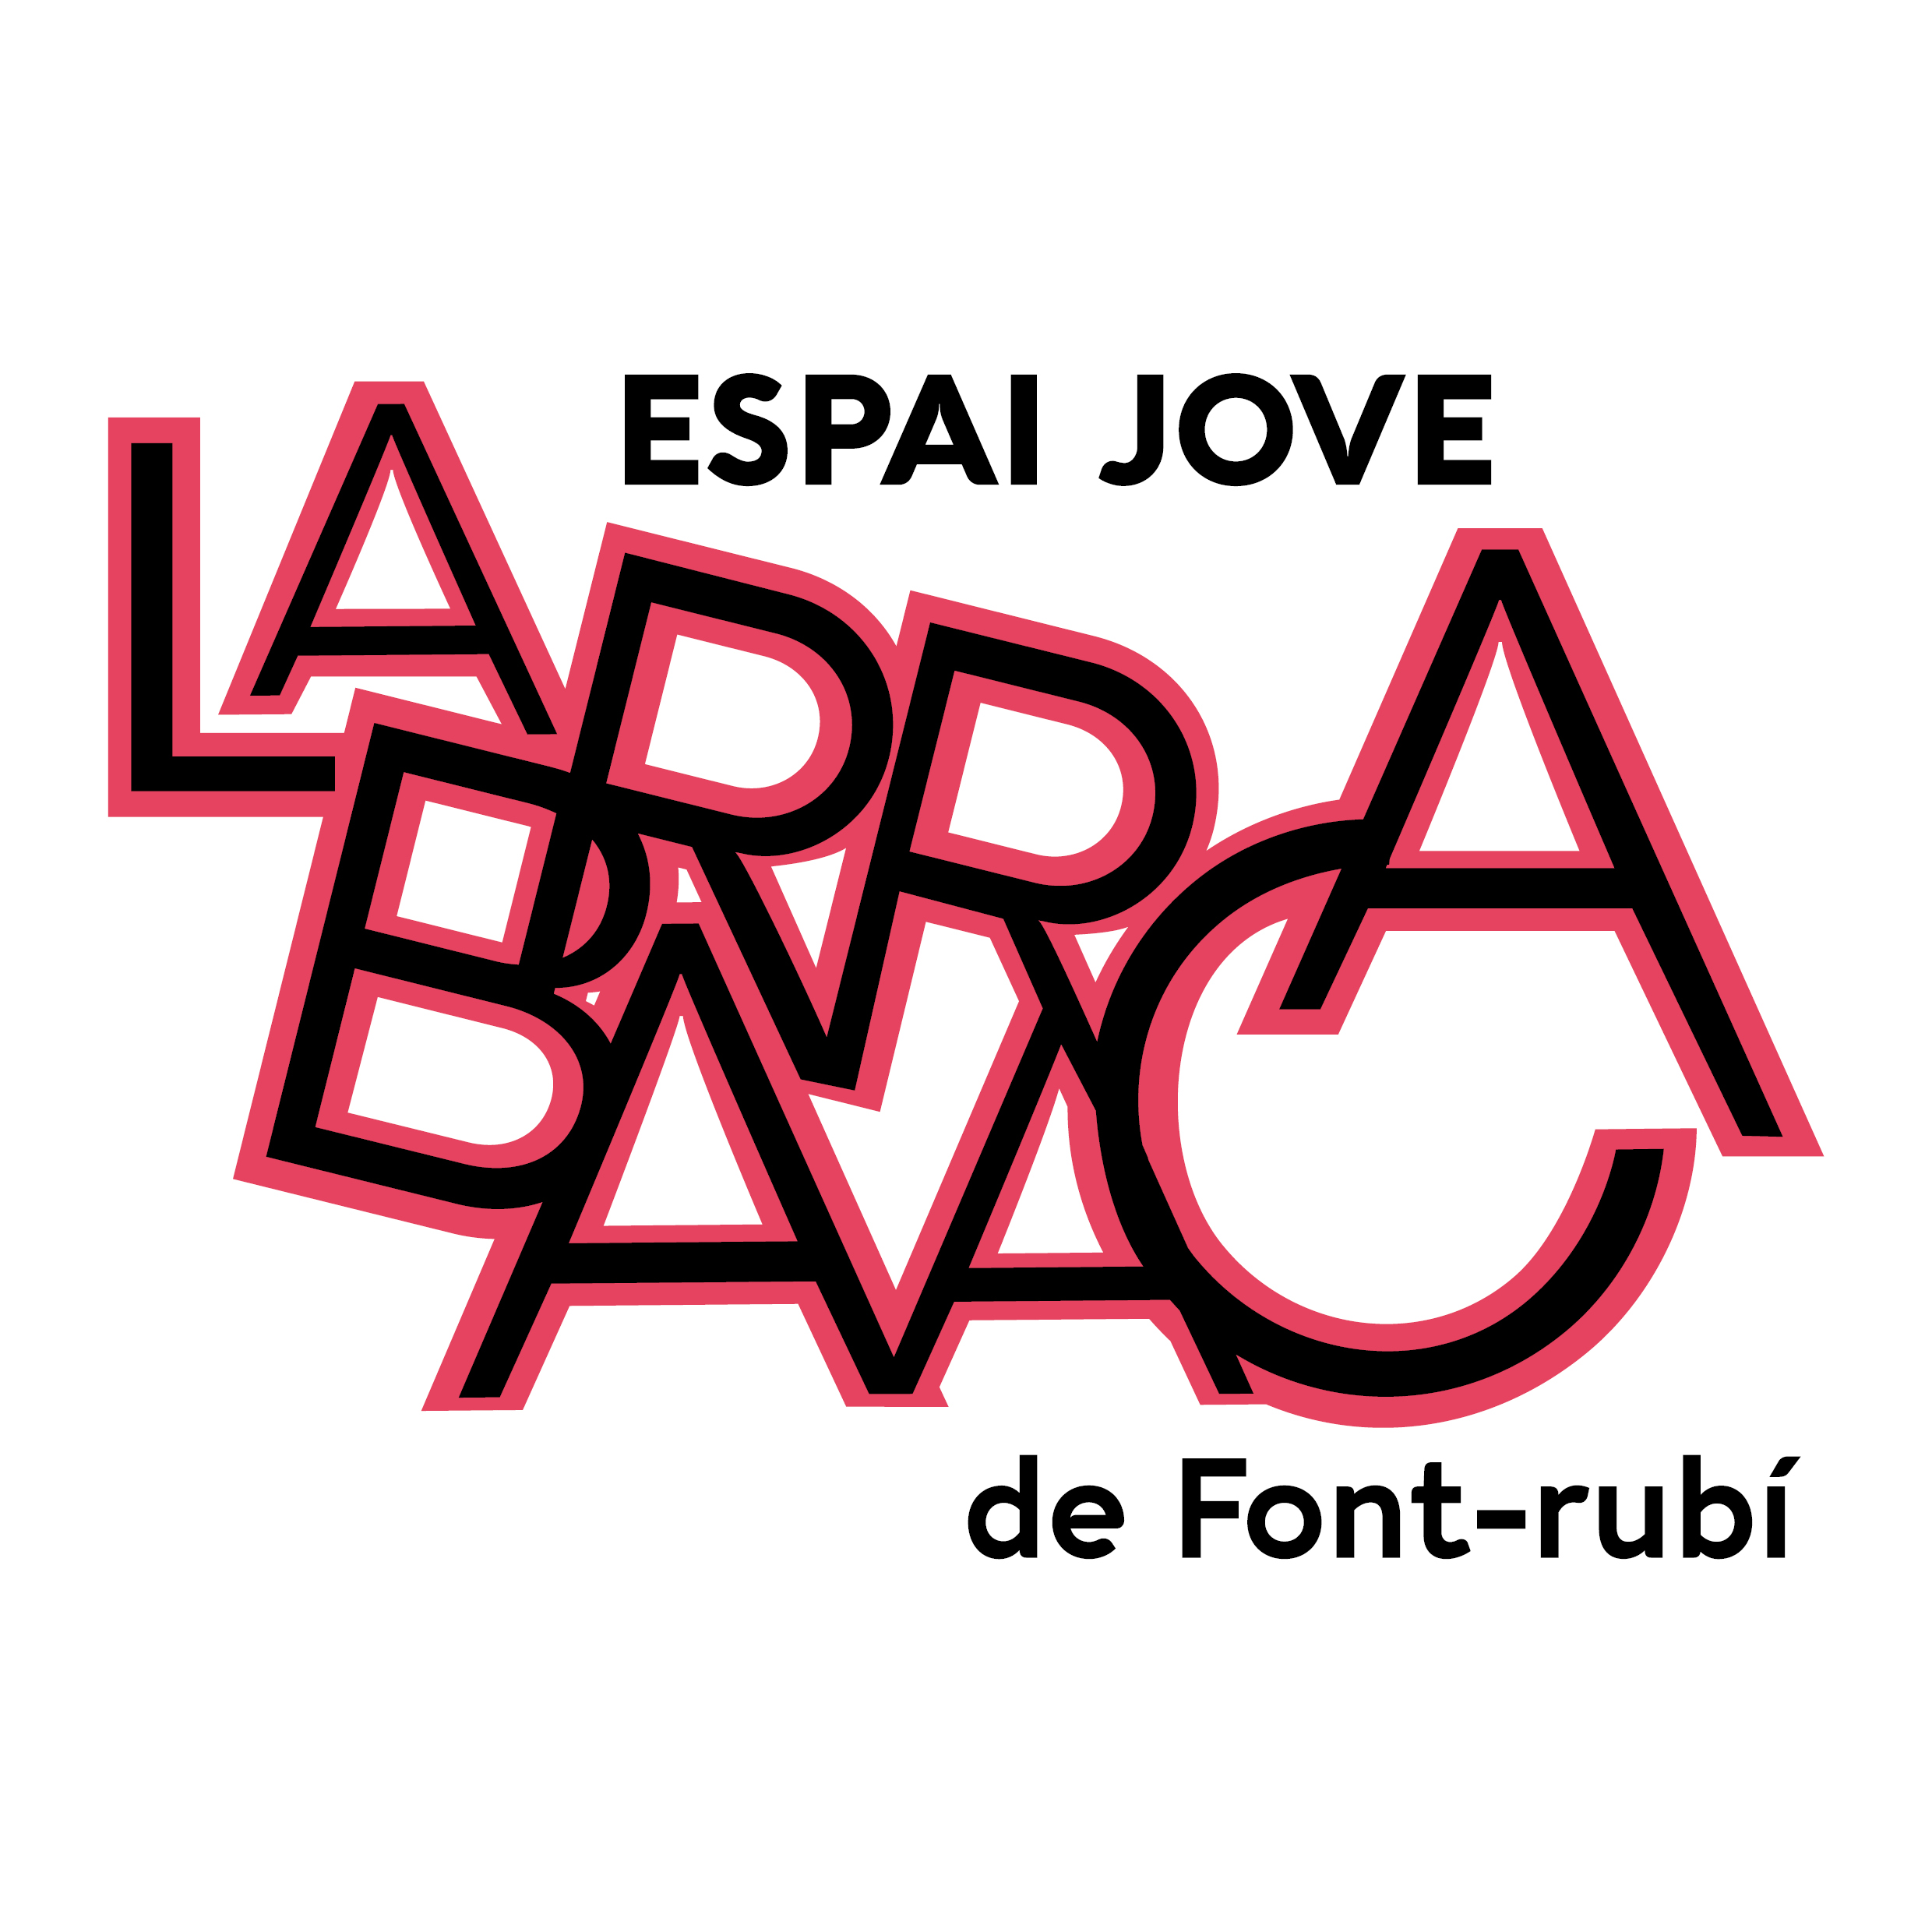 Logos Espai Jove La Barraca